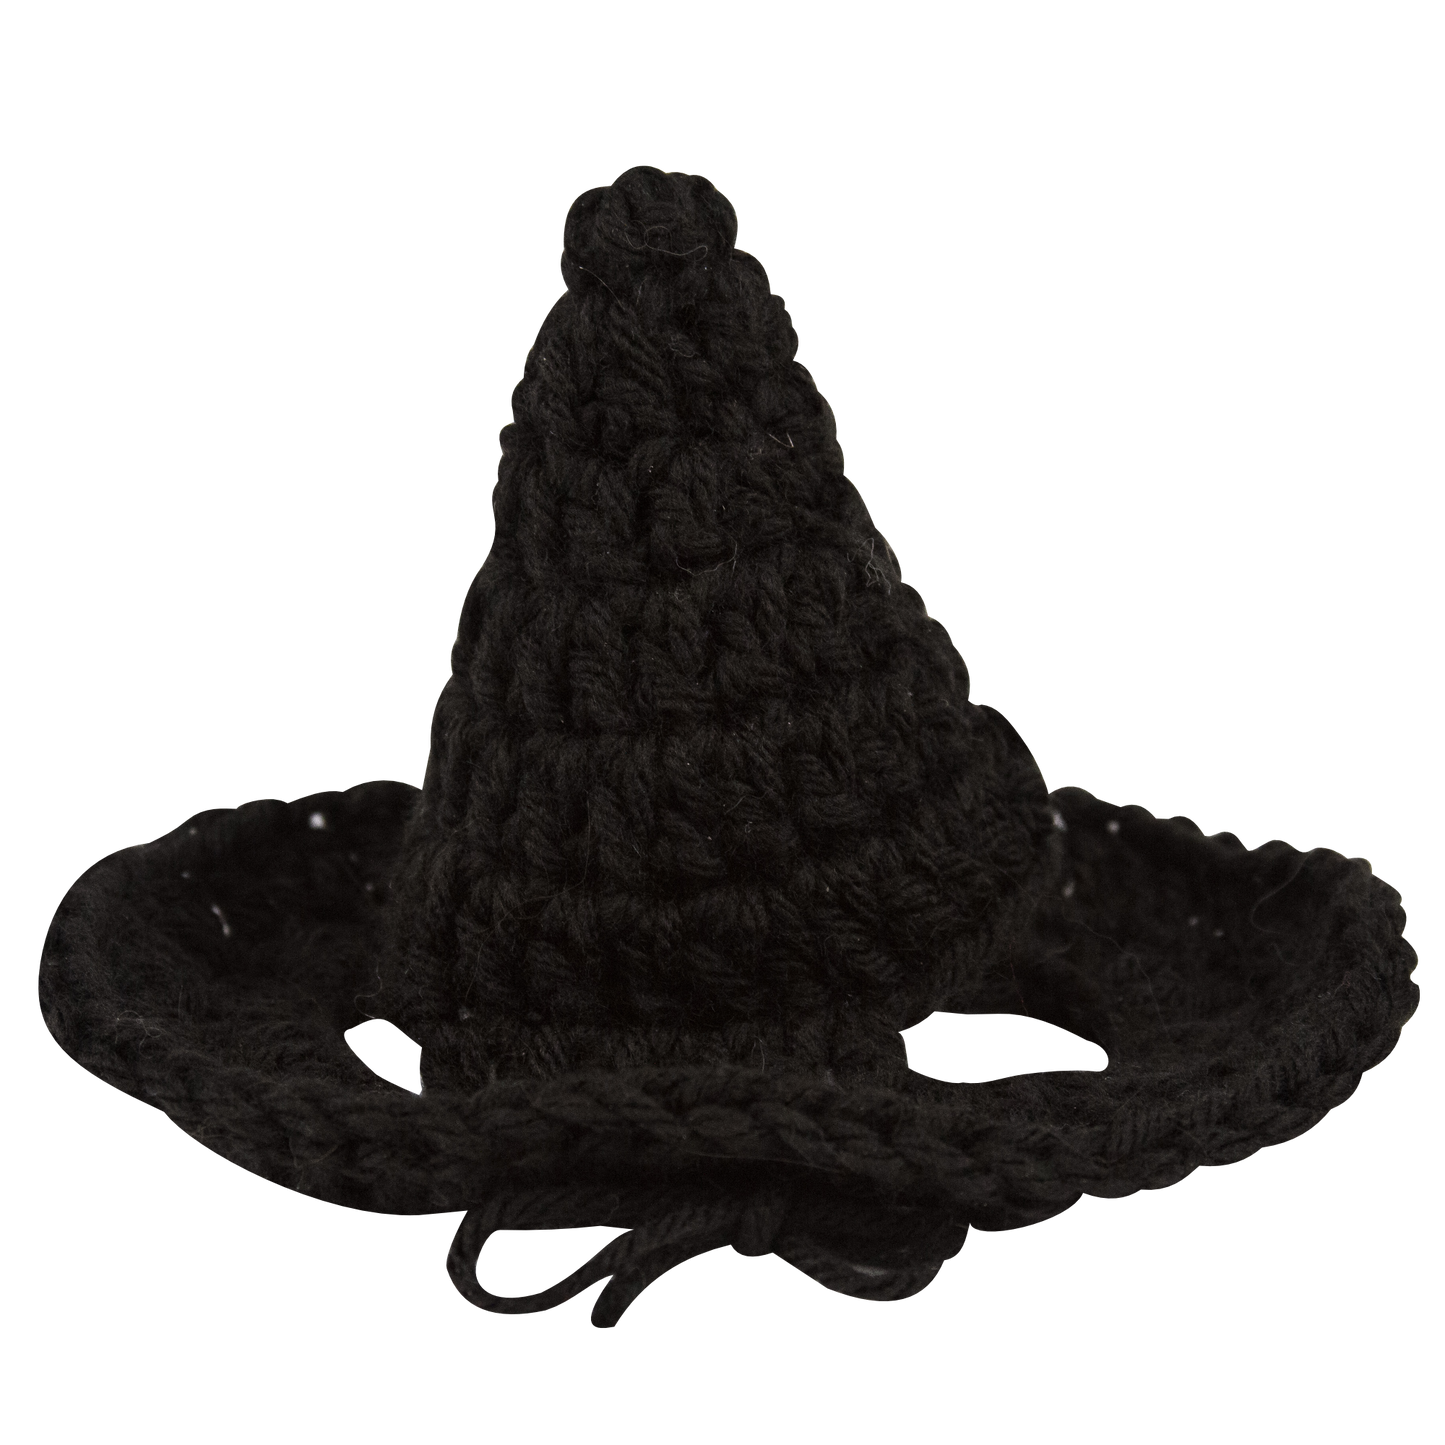 Familiar Hat - Black